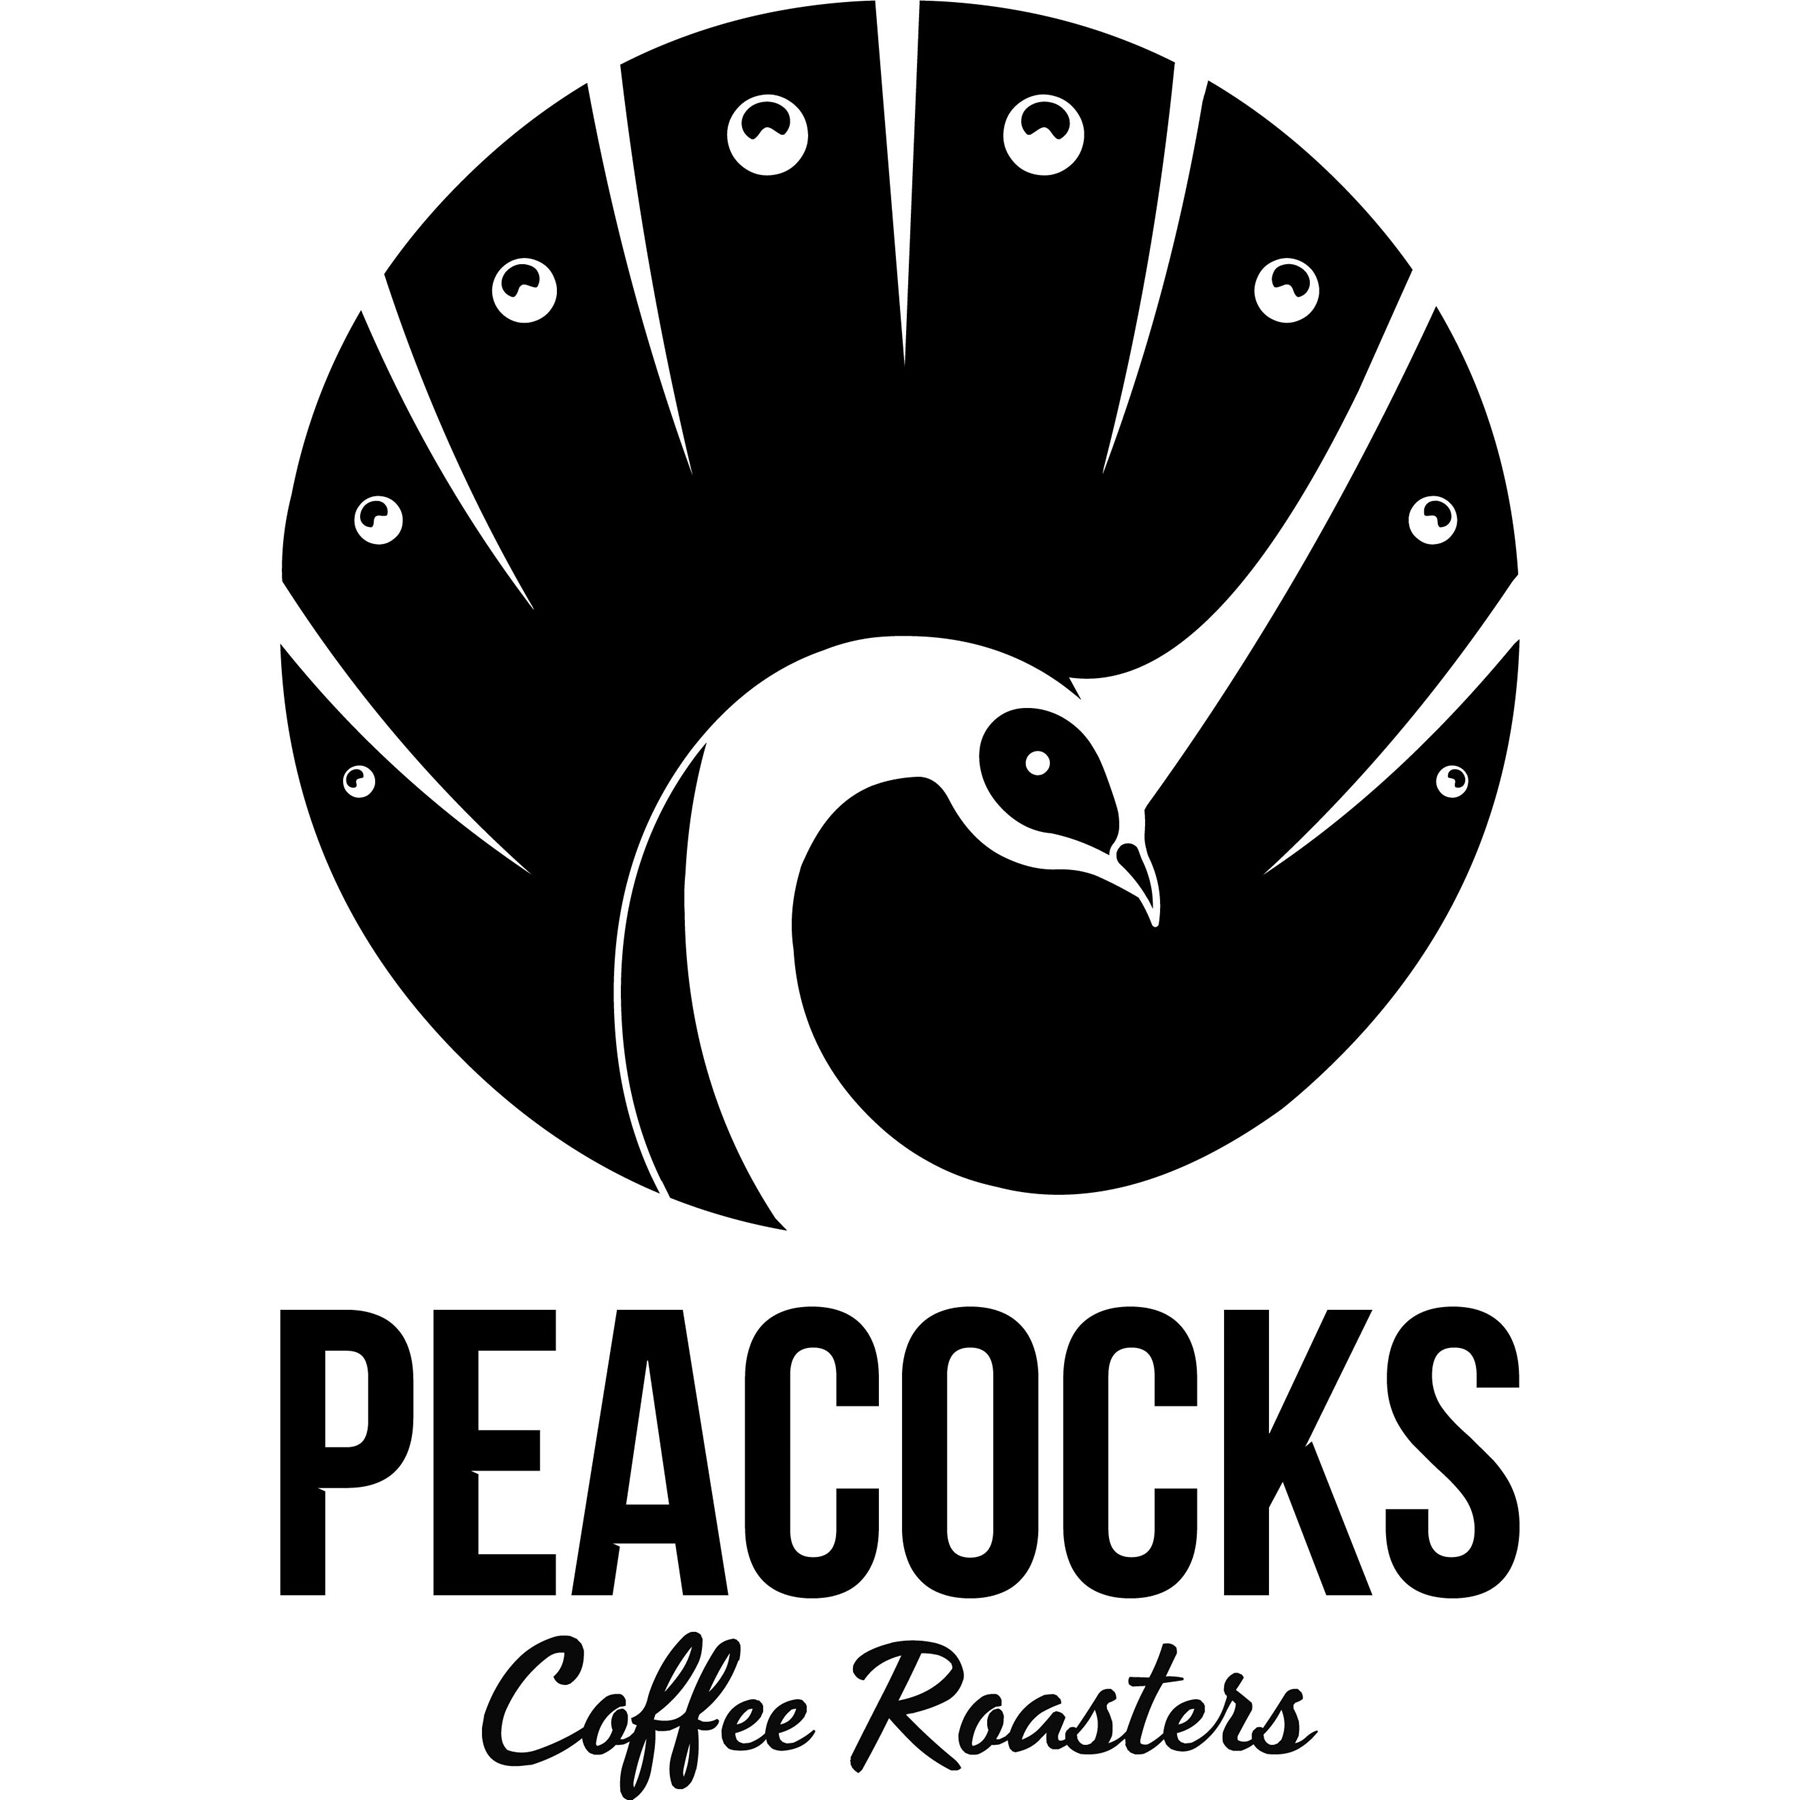 Peacocks Coffee